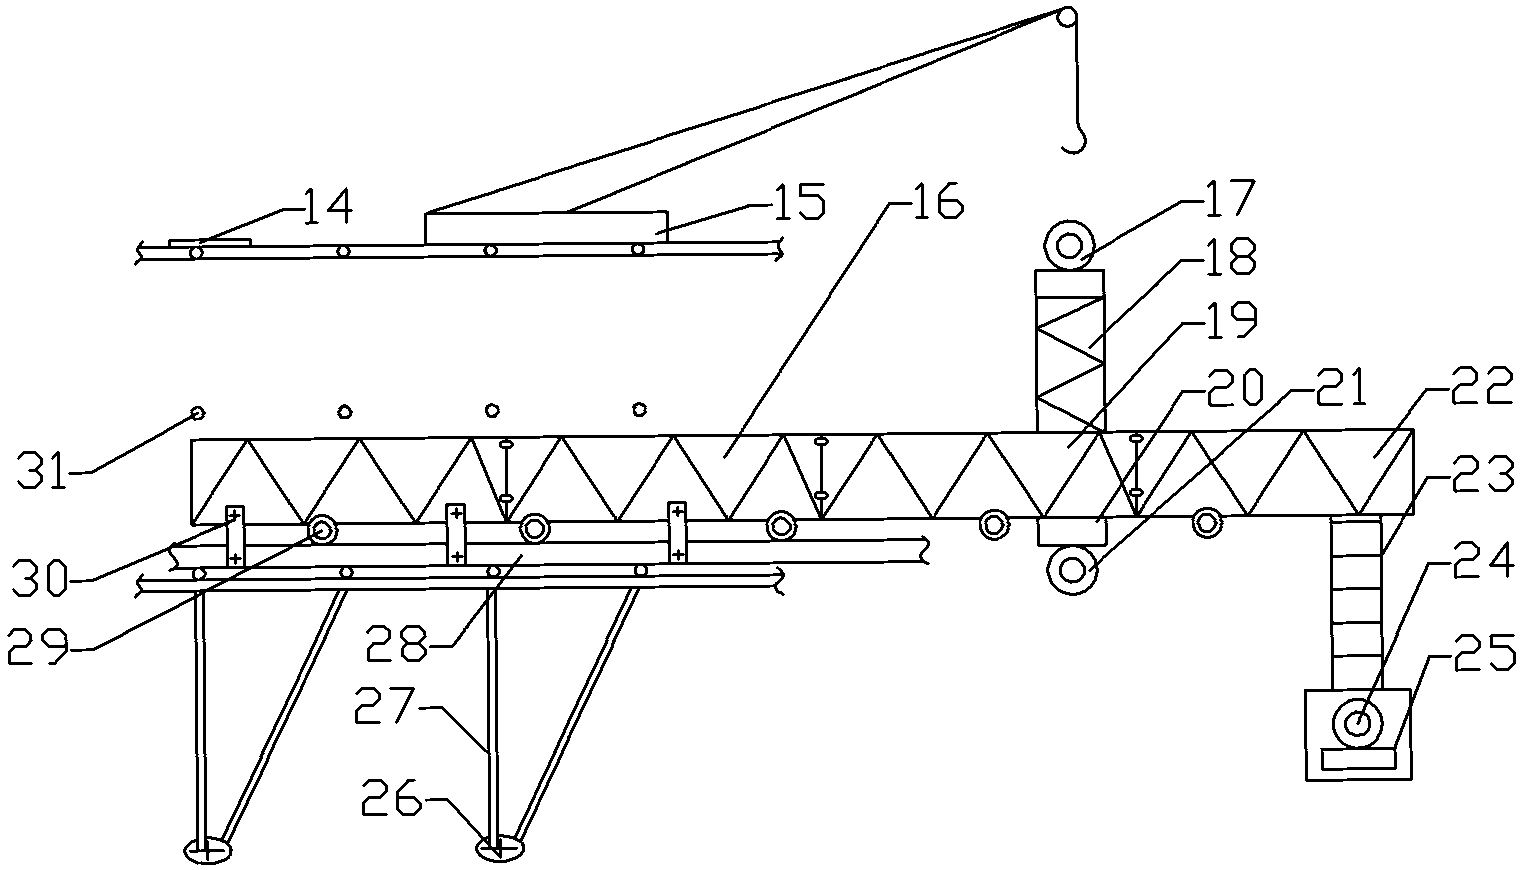 Method for constructing cliff scaffold platform